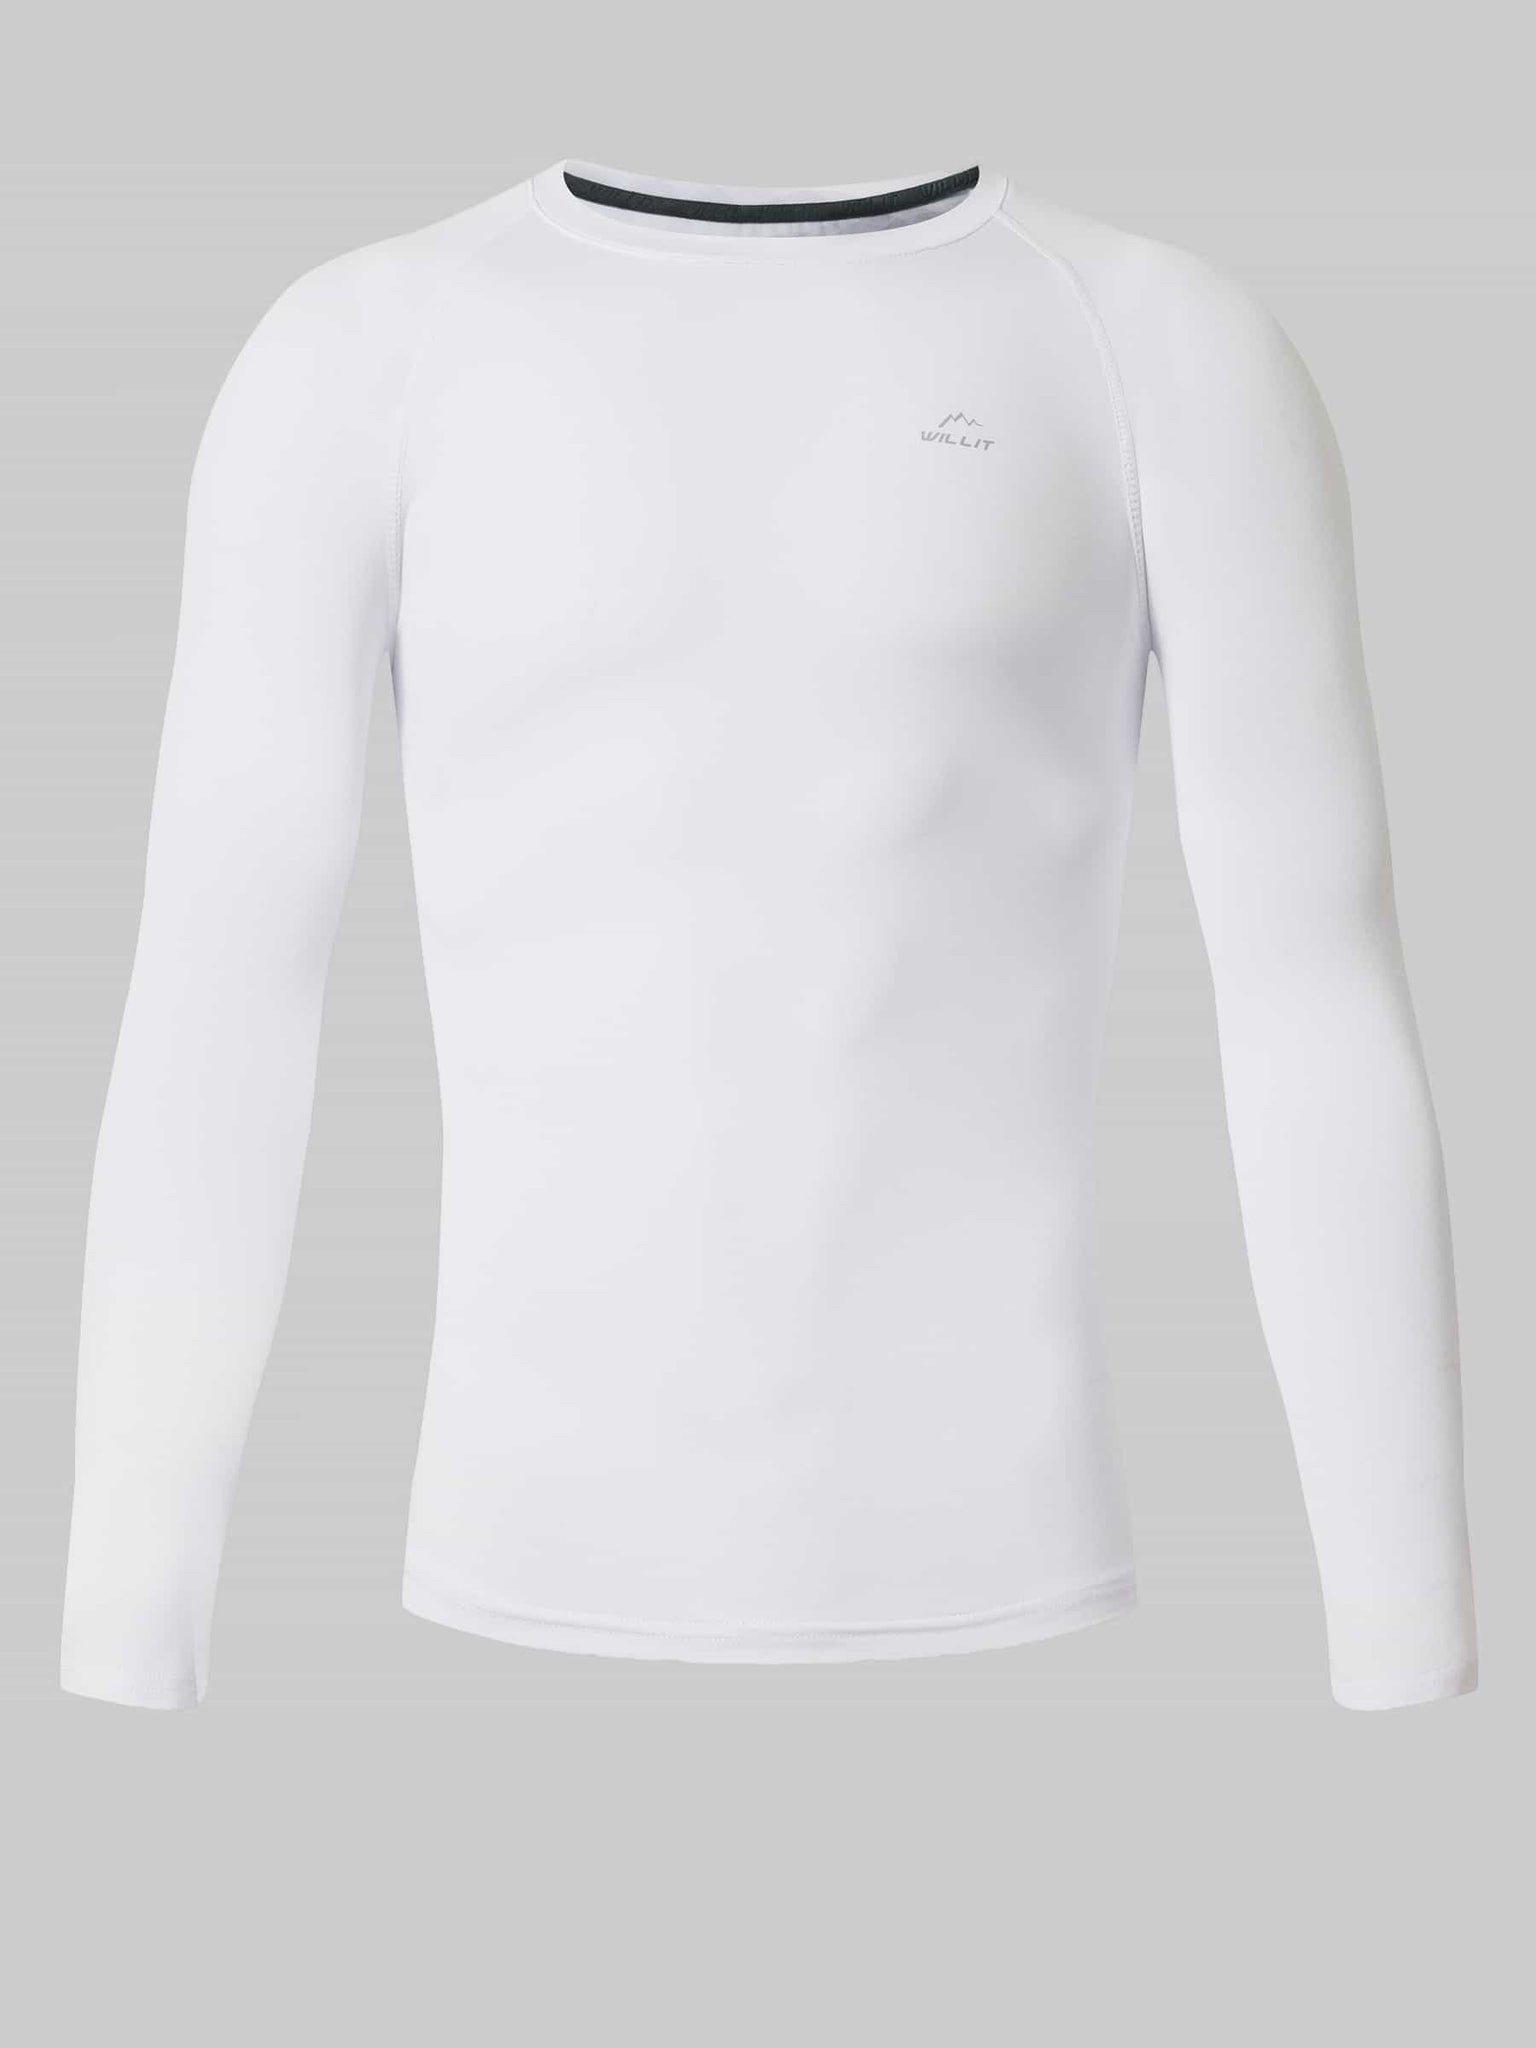 Boys Long-Sleeve Soccer Undershirt_White_laydown2